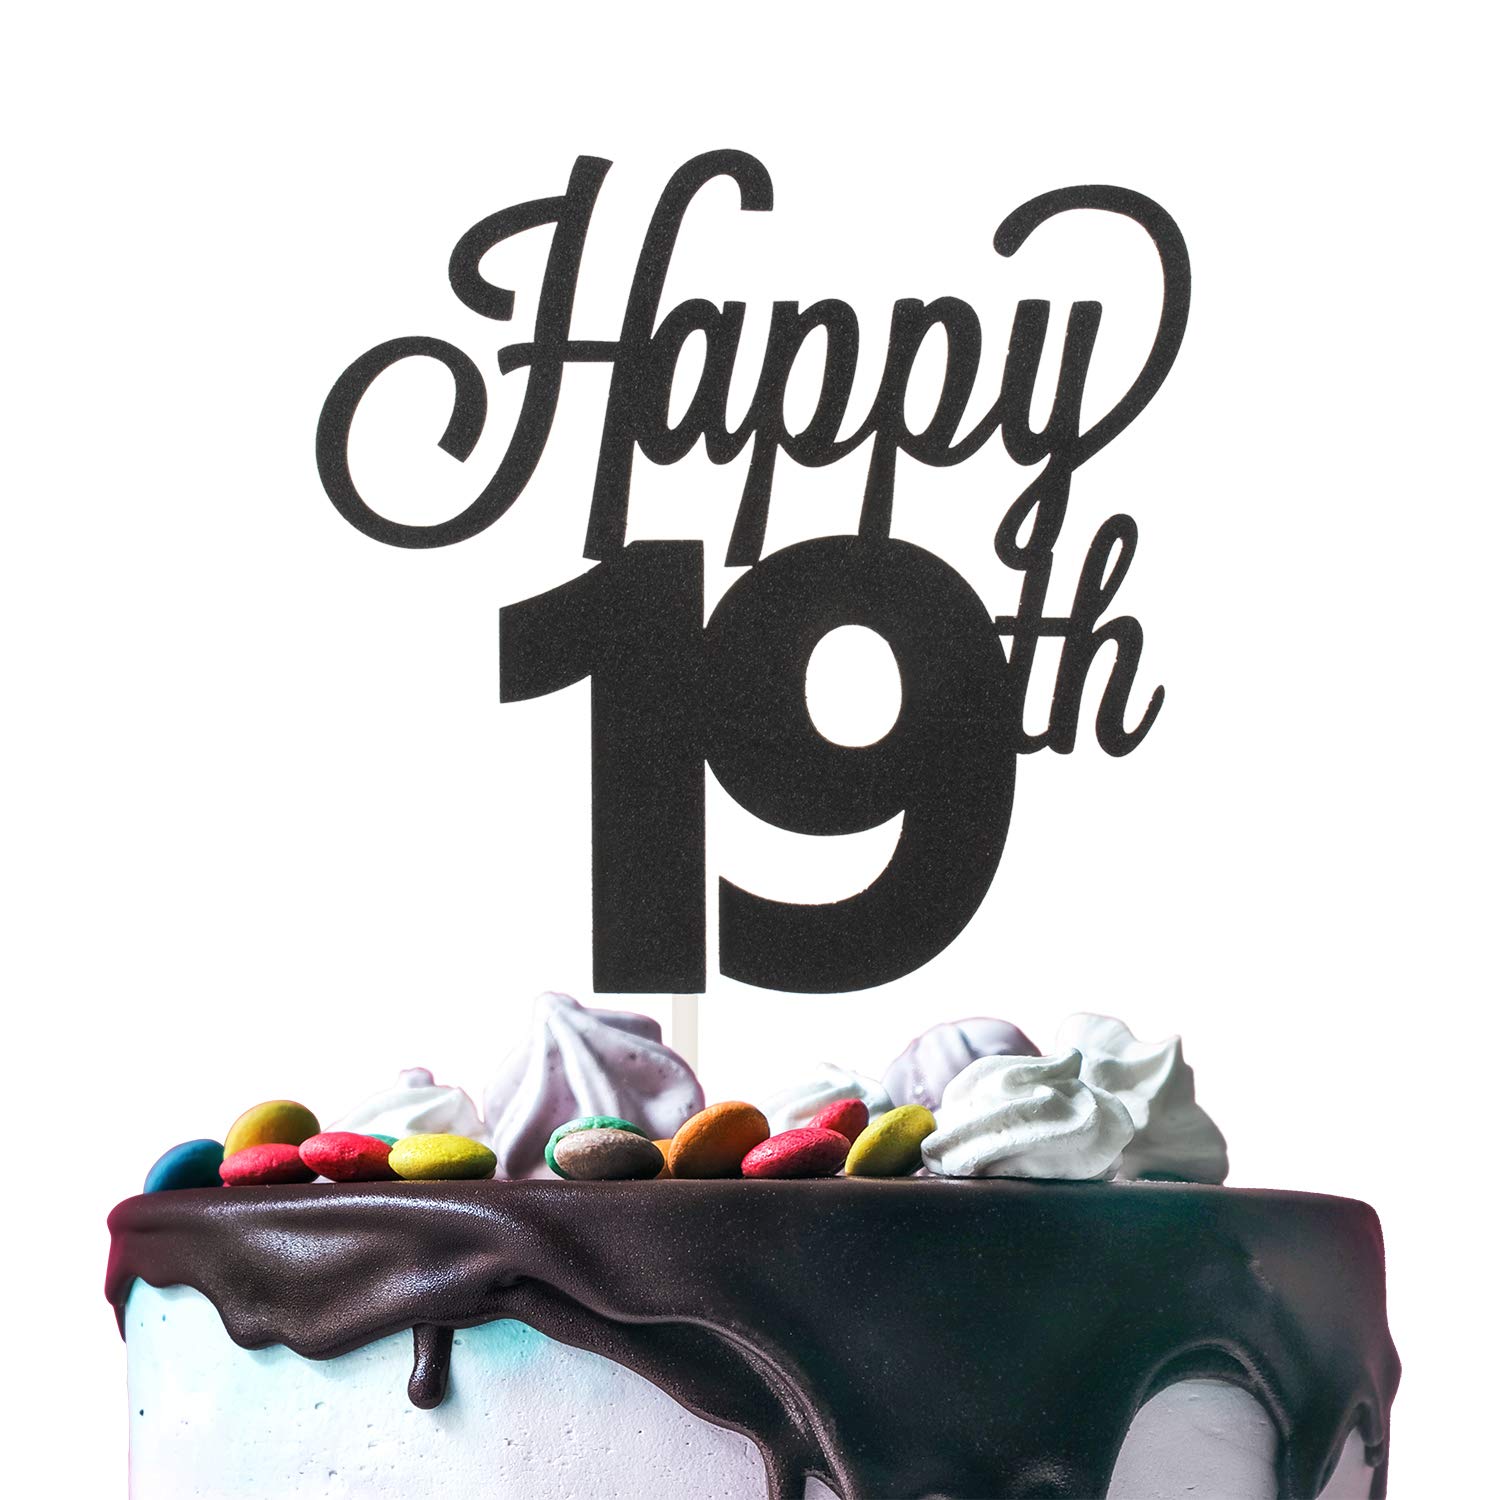 19Th Birthday Cake - CakeCentral.com